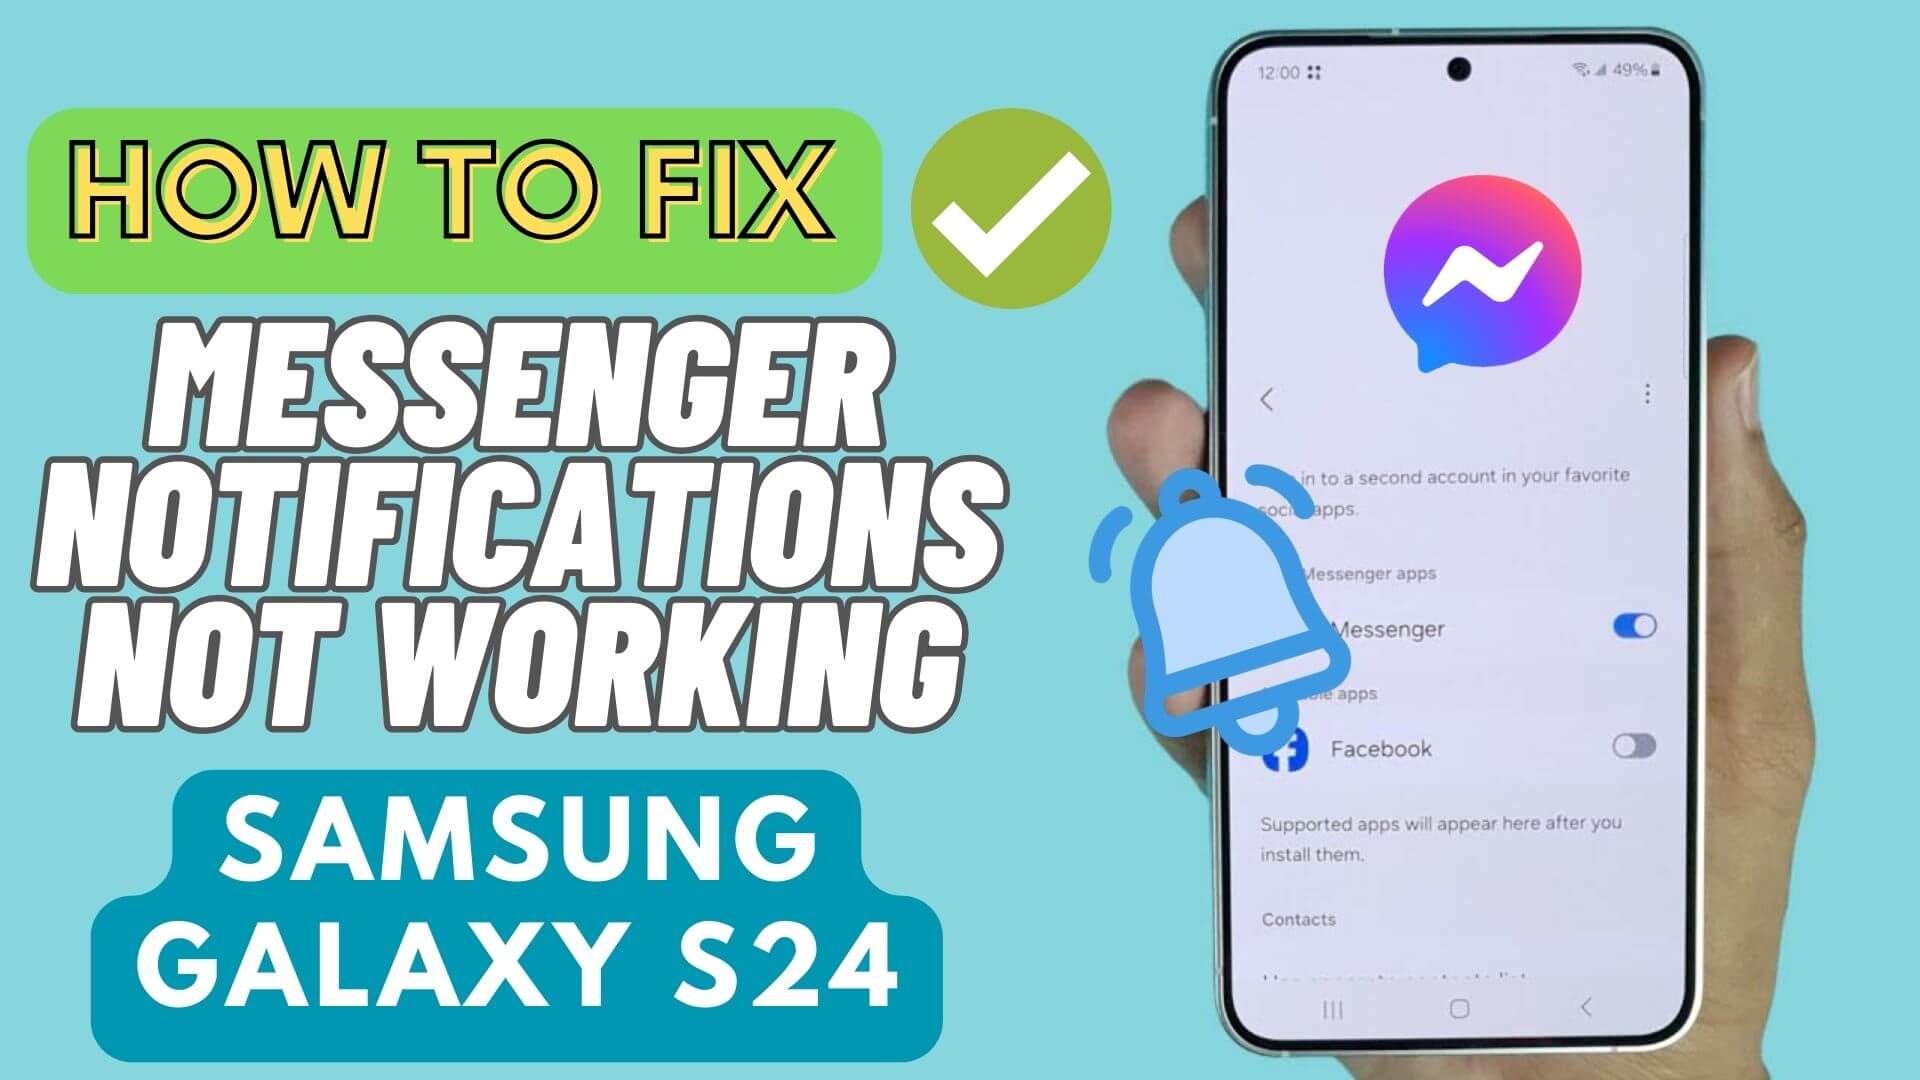 Fix Messenger Notifications Not Working On Samsung Galaxy S24